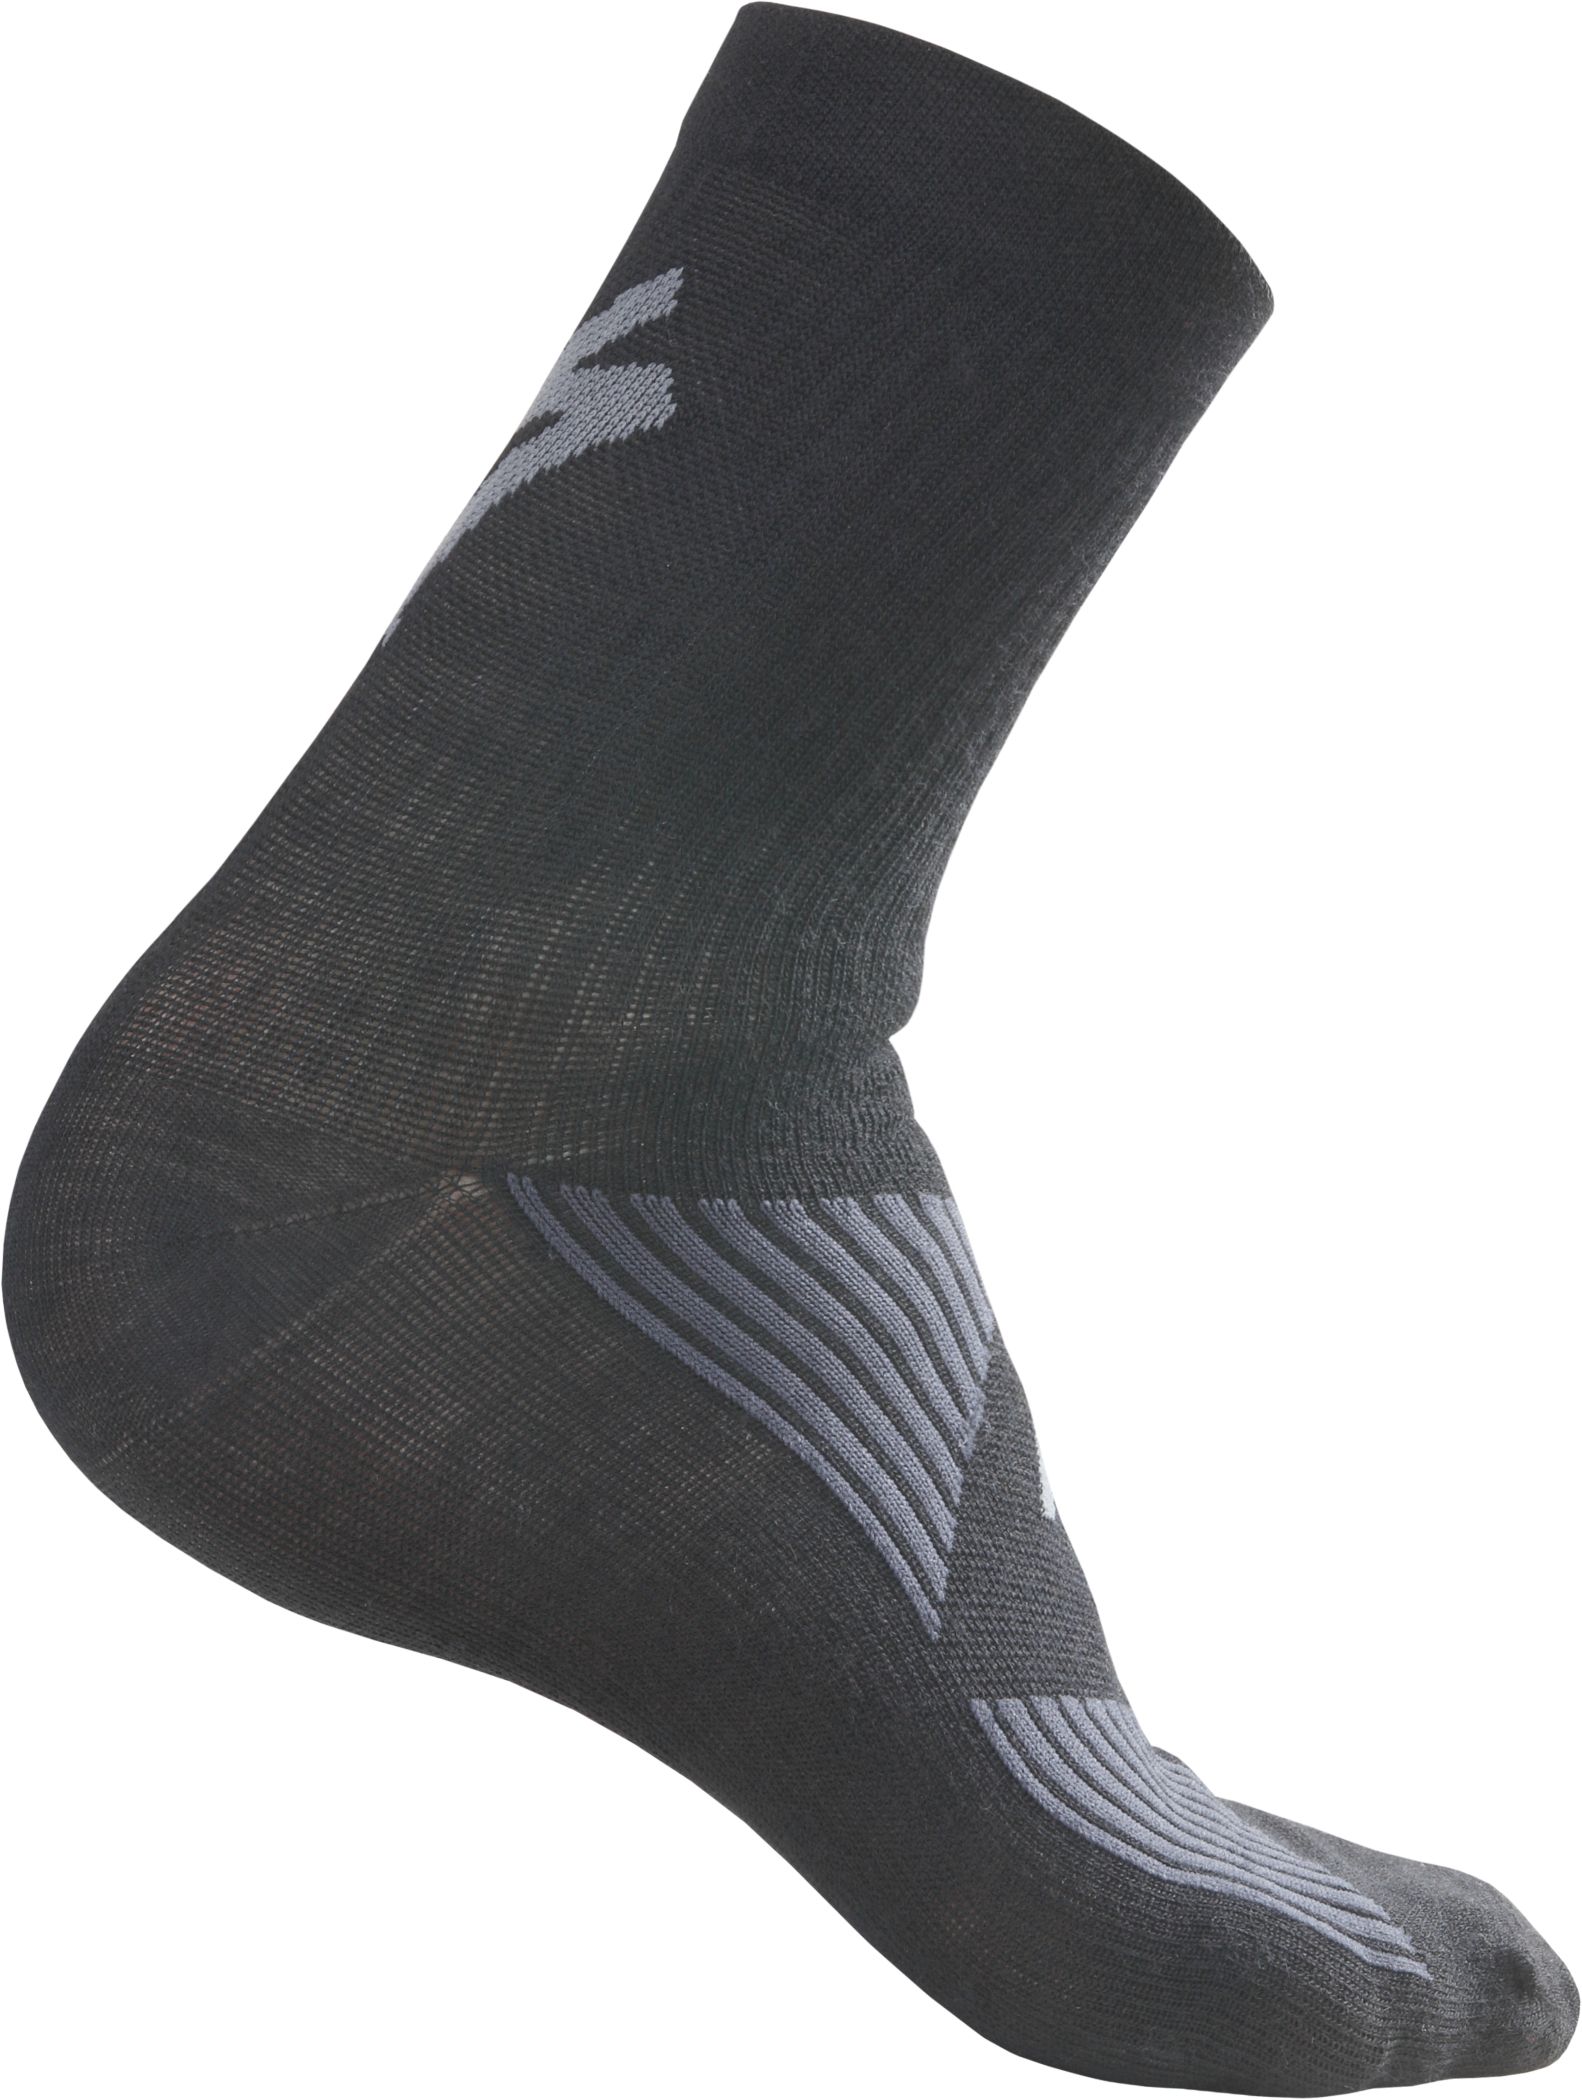 Specialized SL Elite Merino Wool Socks - £15.3 | Socks | Cyclestore